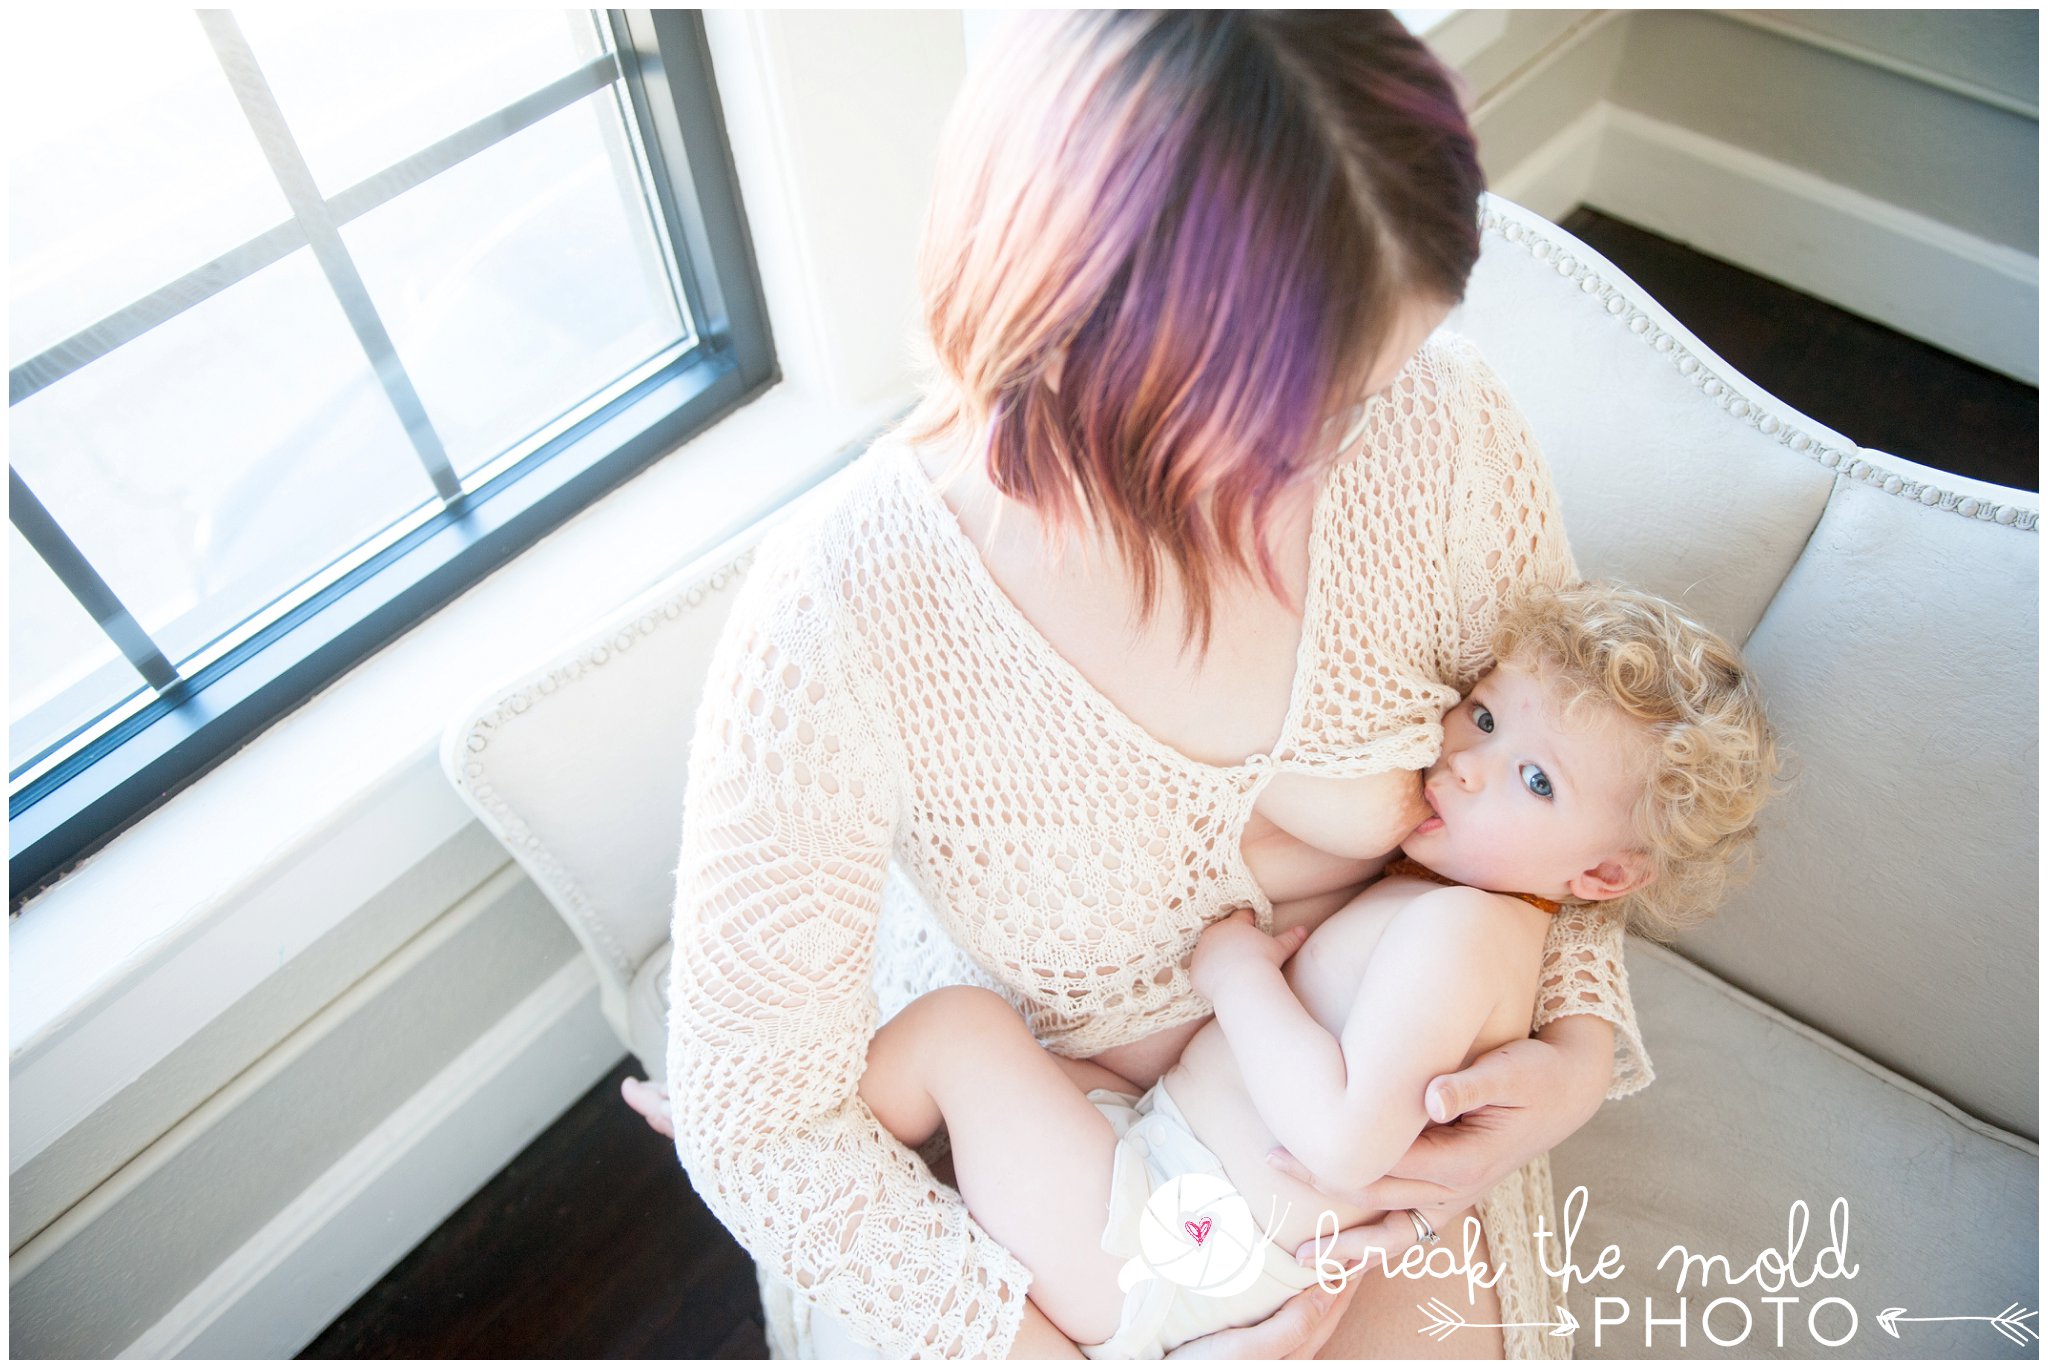 break-the-mold-photo-nursing-body-love-baby-pregnant-women-powerful-breastfeeding-sessions_7243.jpg